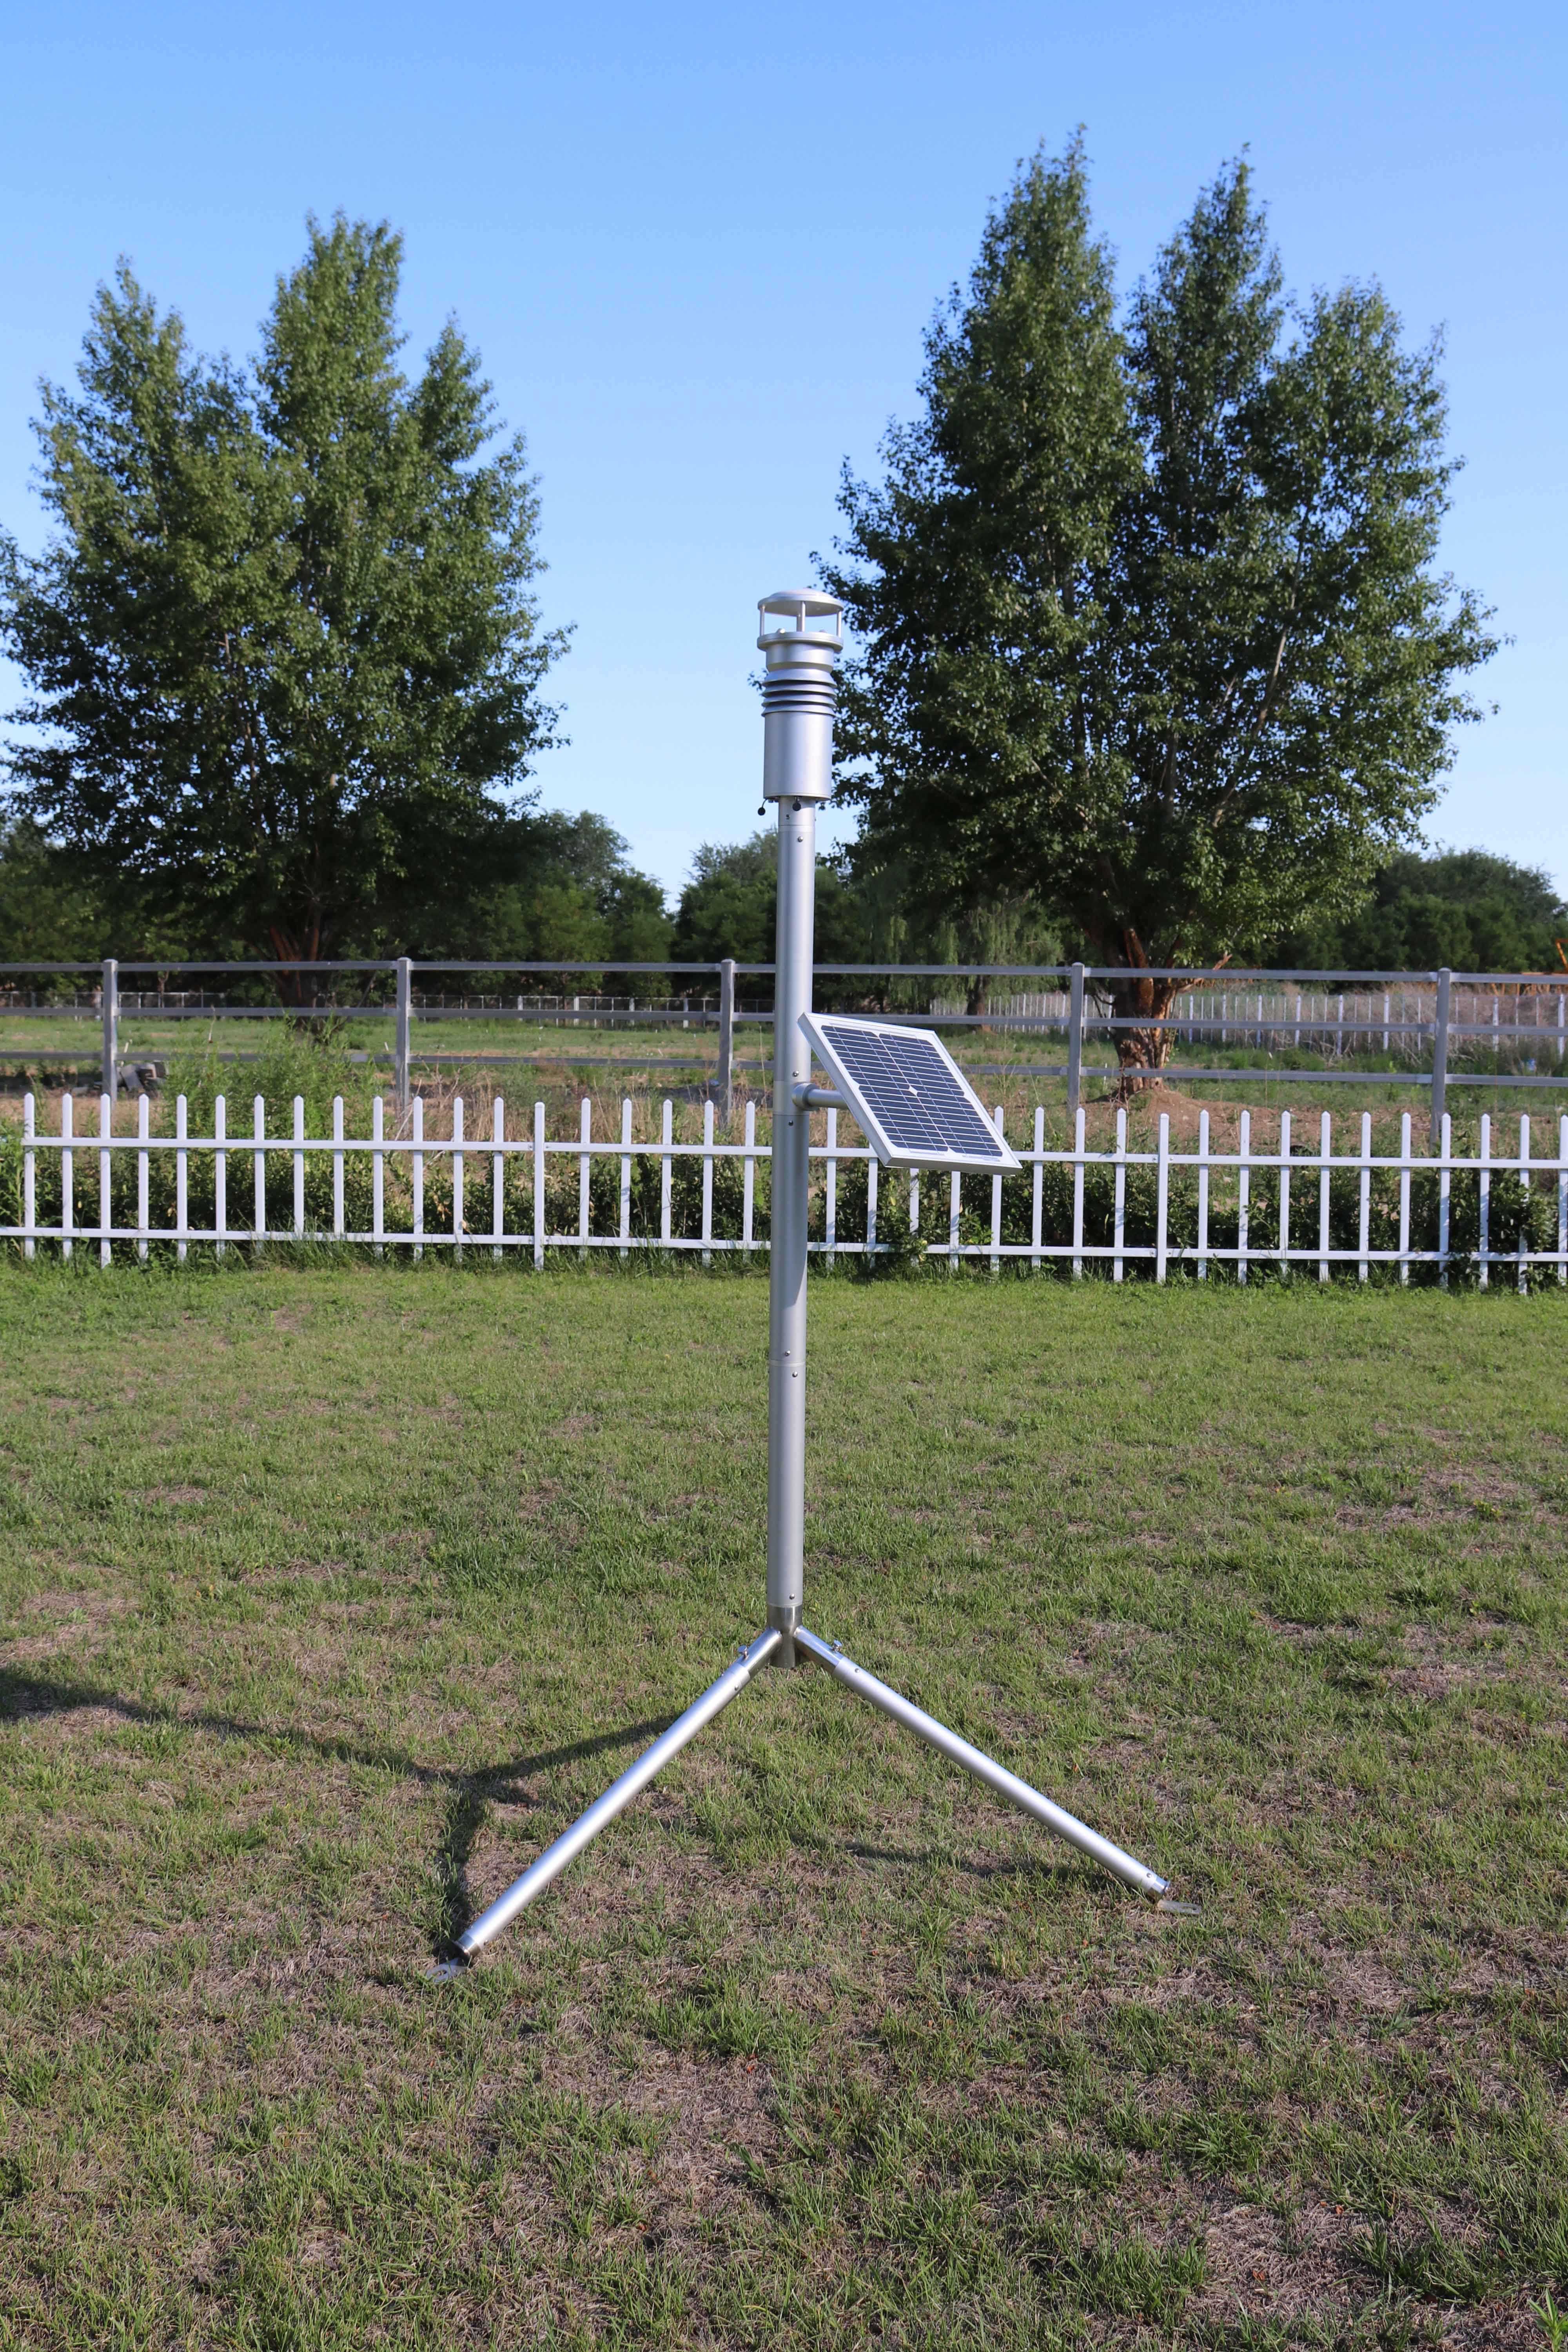 JL-BXZ600(J)便携式自动气象观测仪